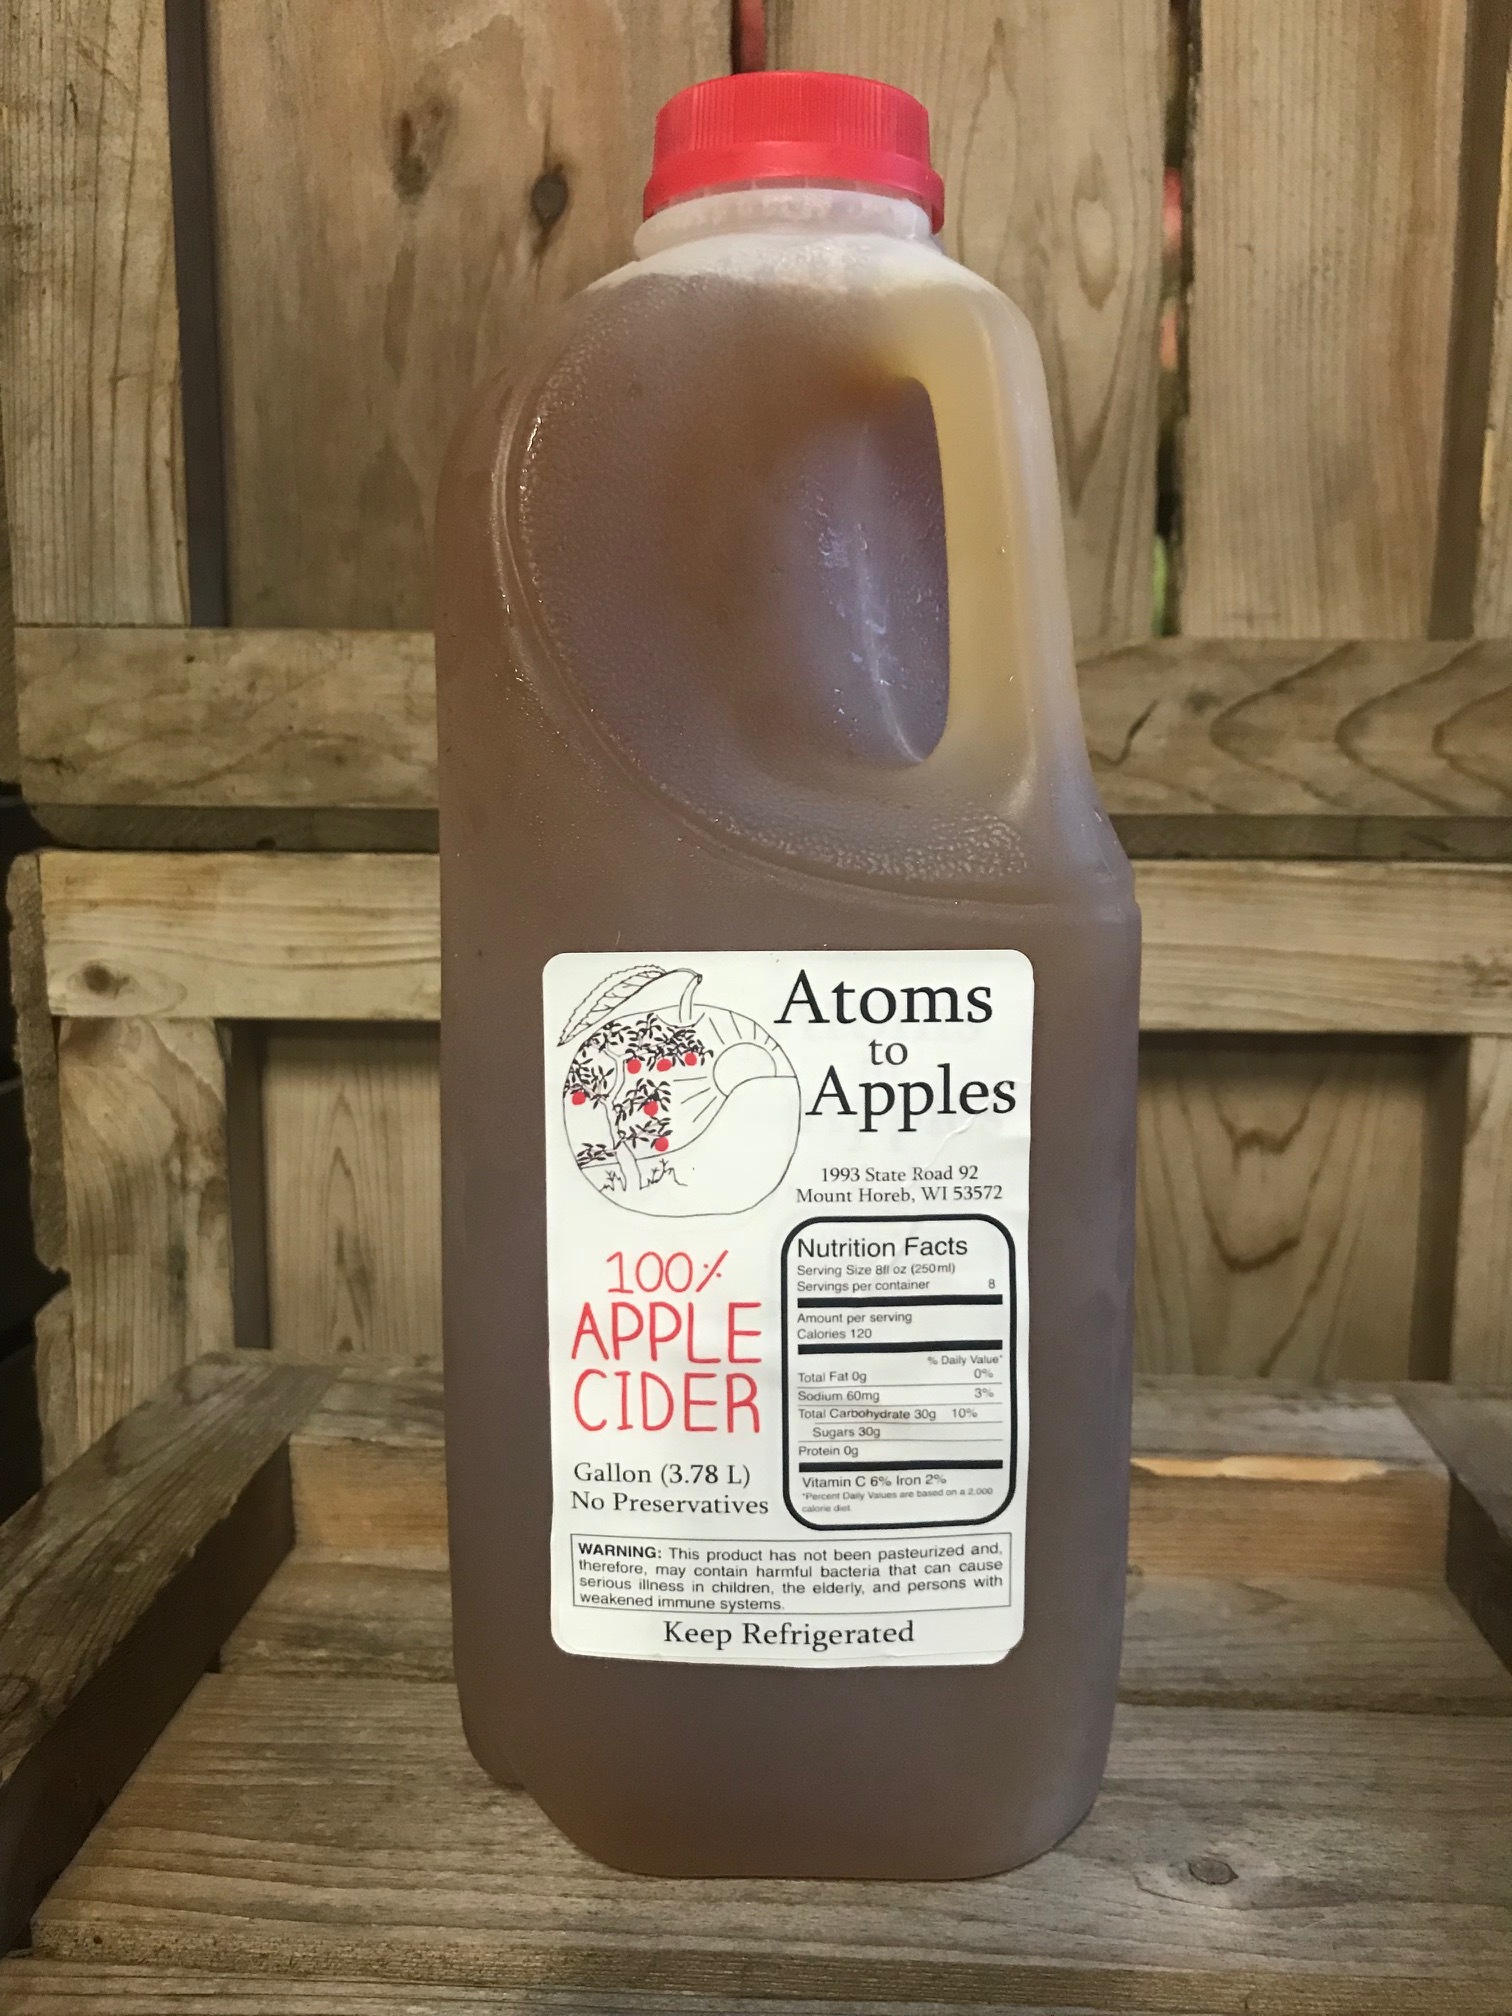 We blend apple flavors each week to press fresh cider